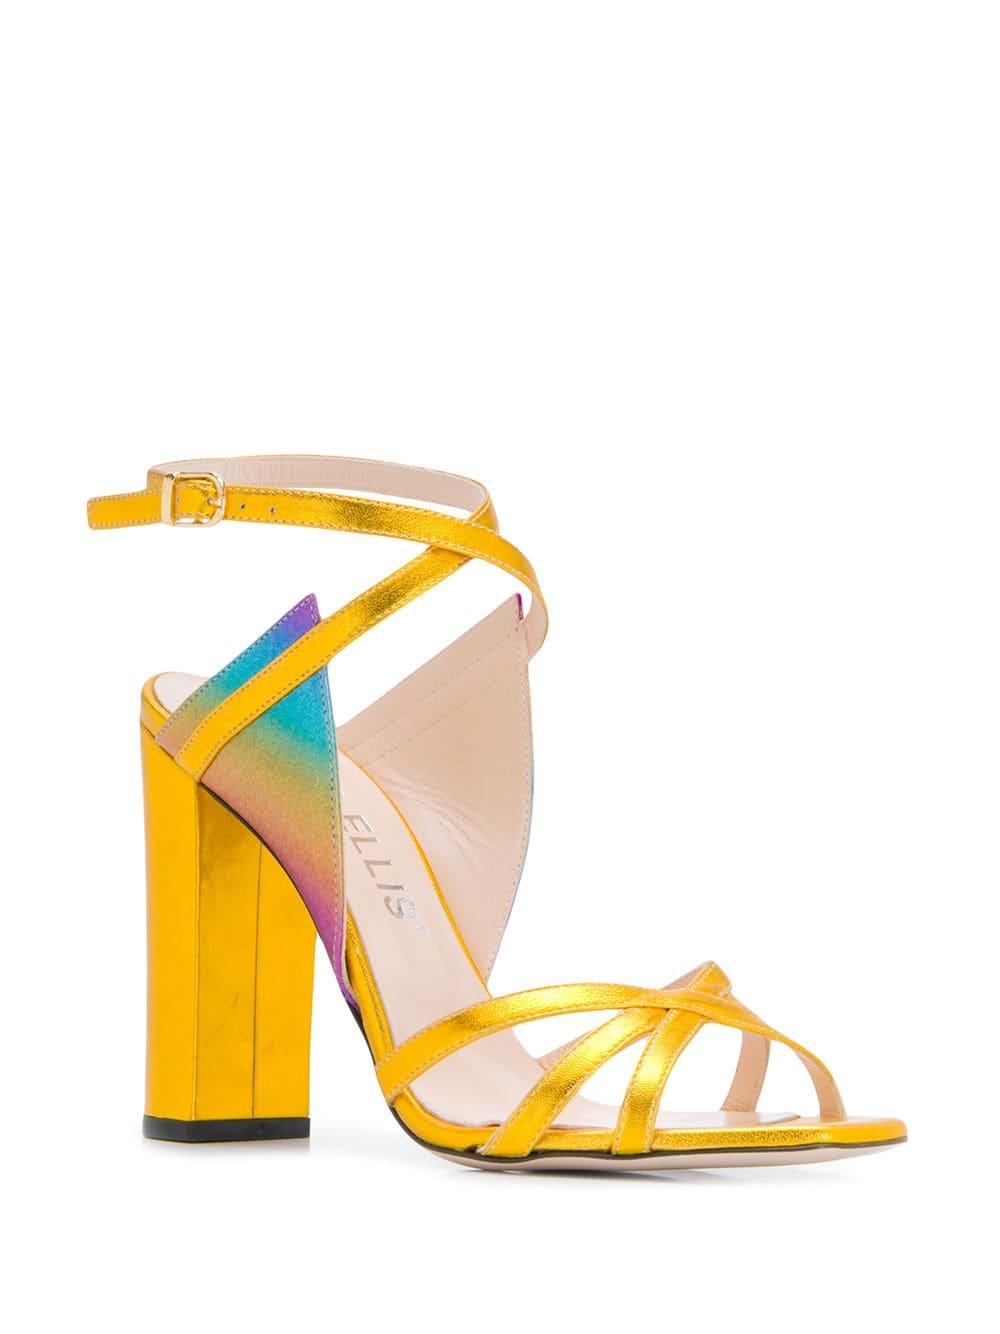 A yellow and rainbow high heel shoe